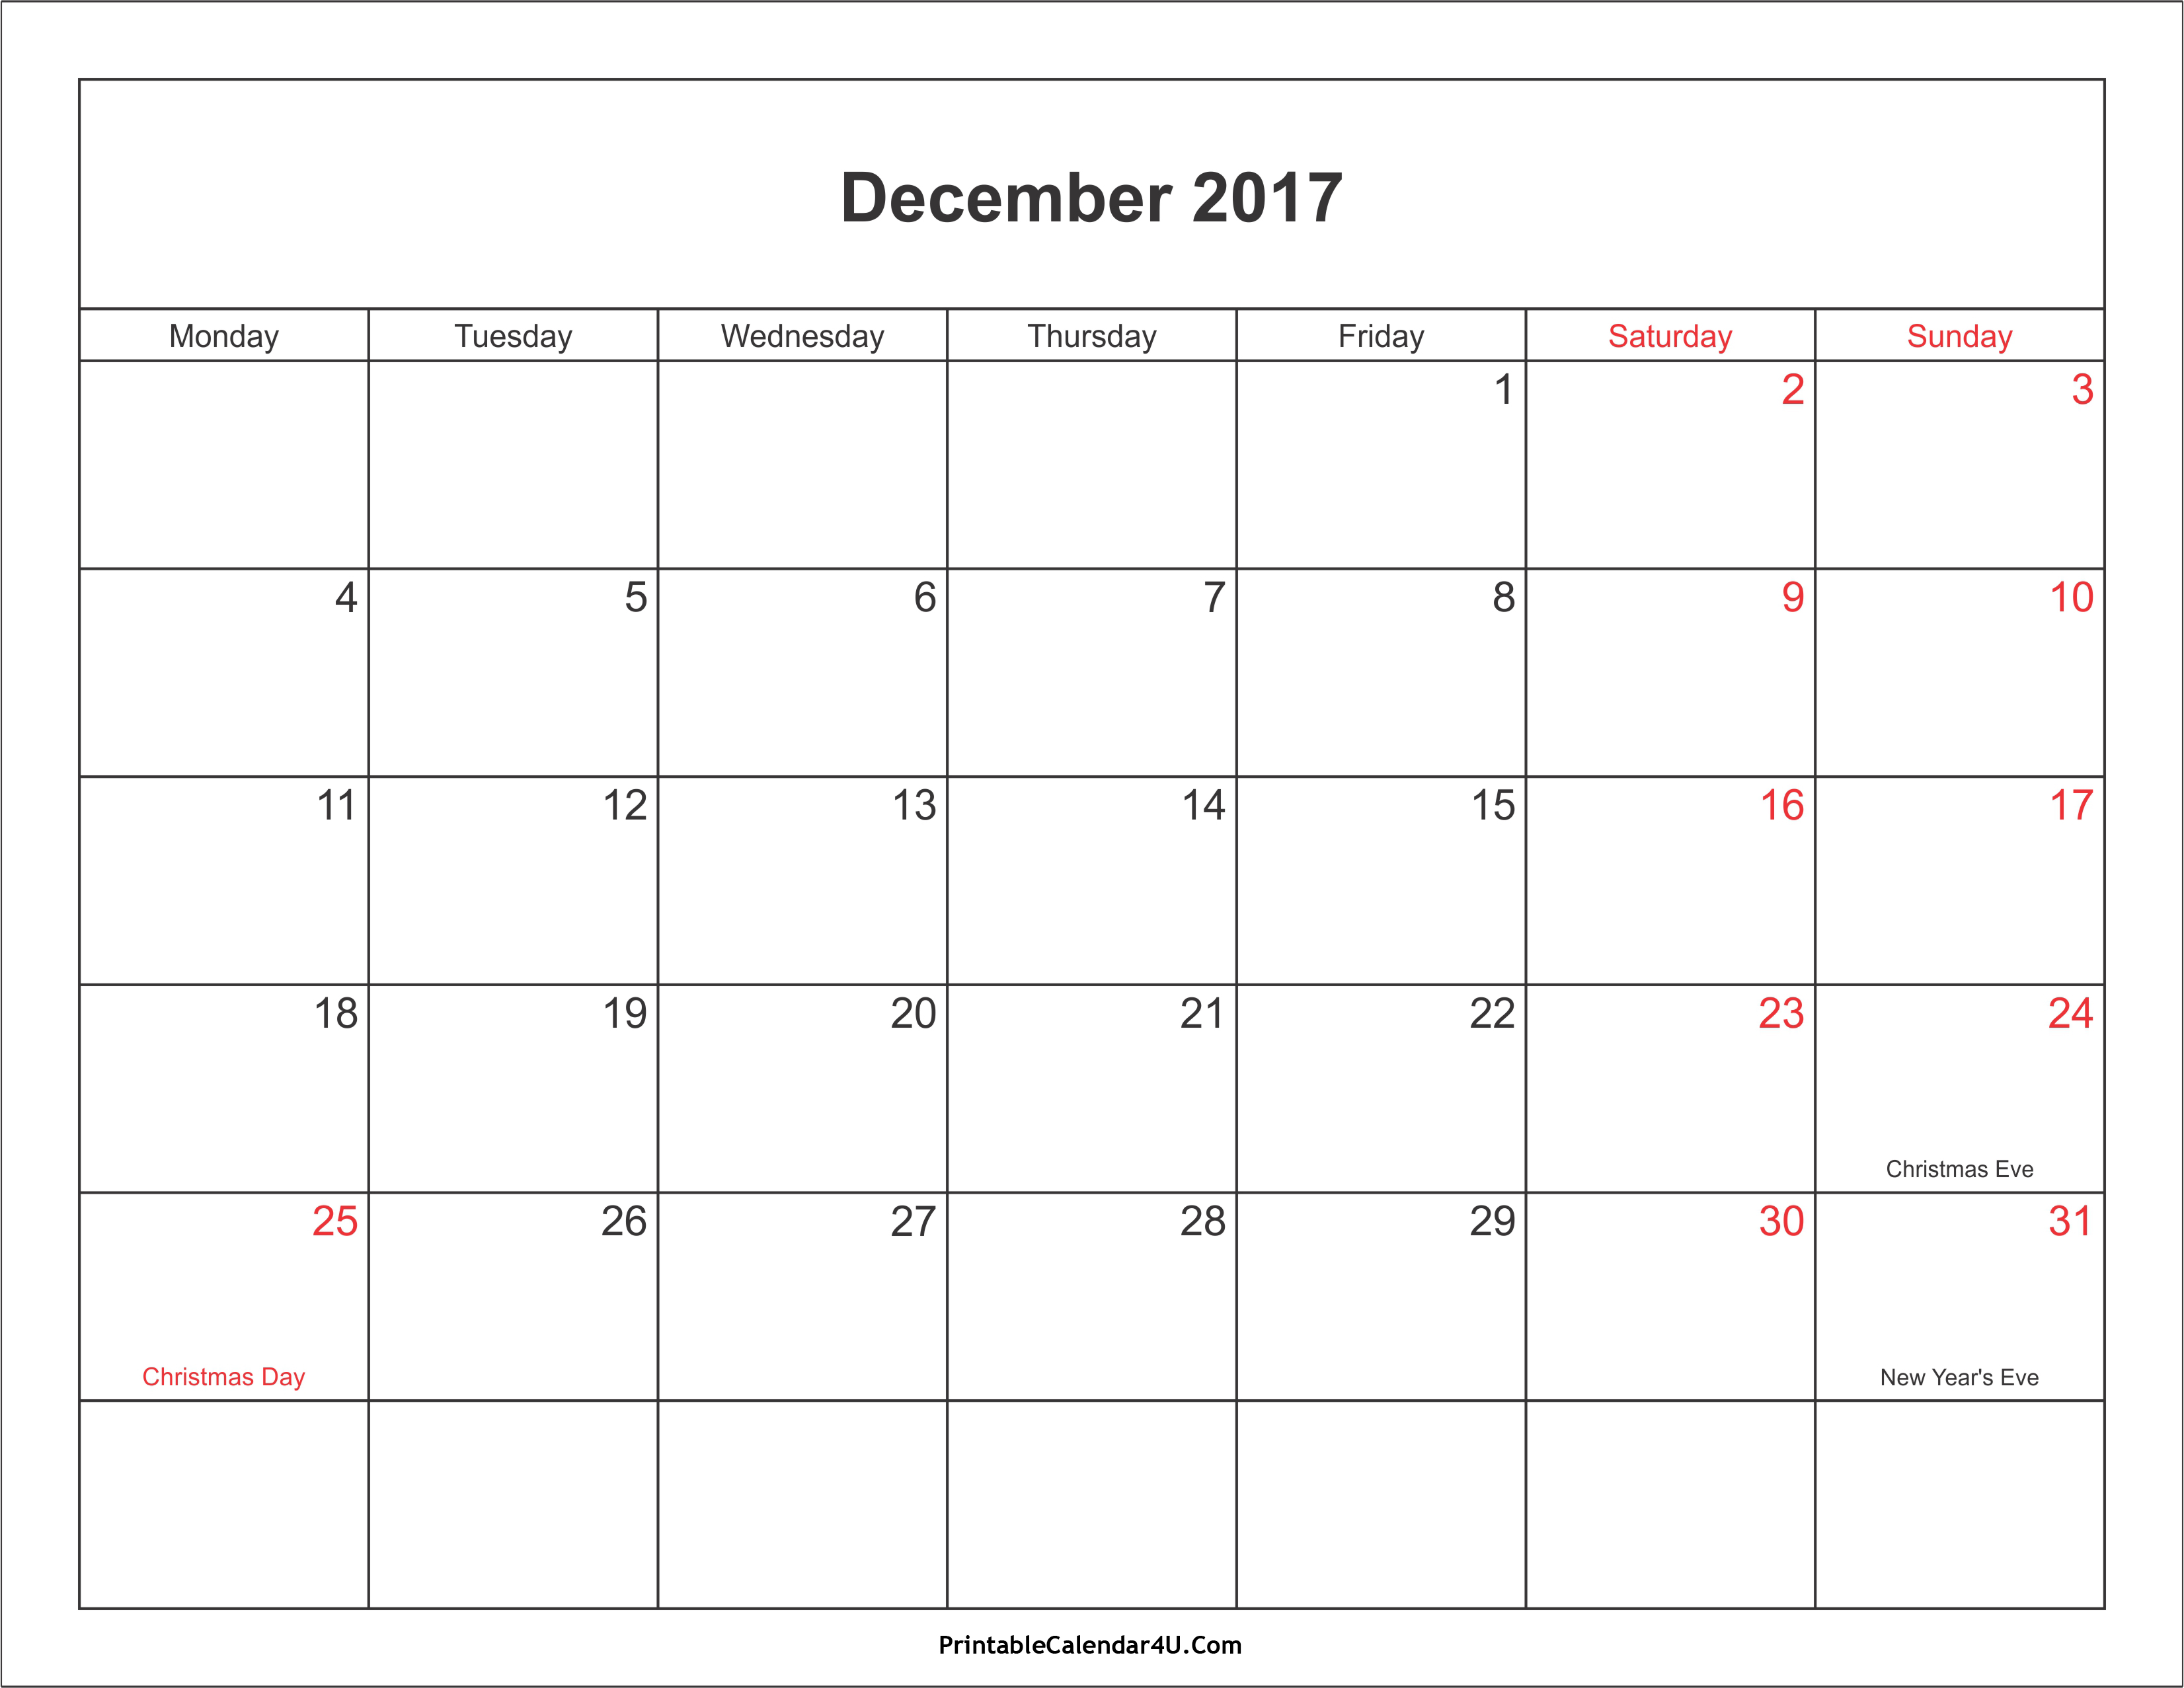 December 2017 calendar printable with holidays (4)